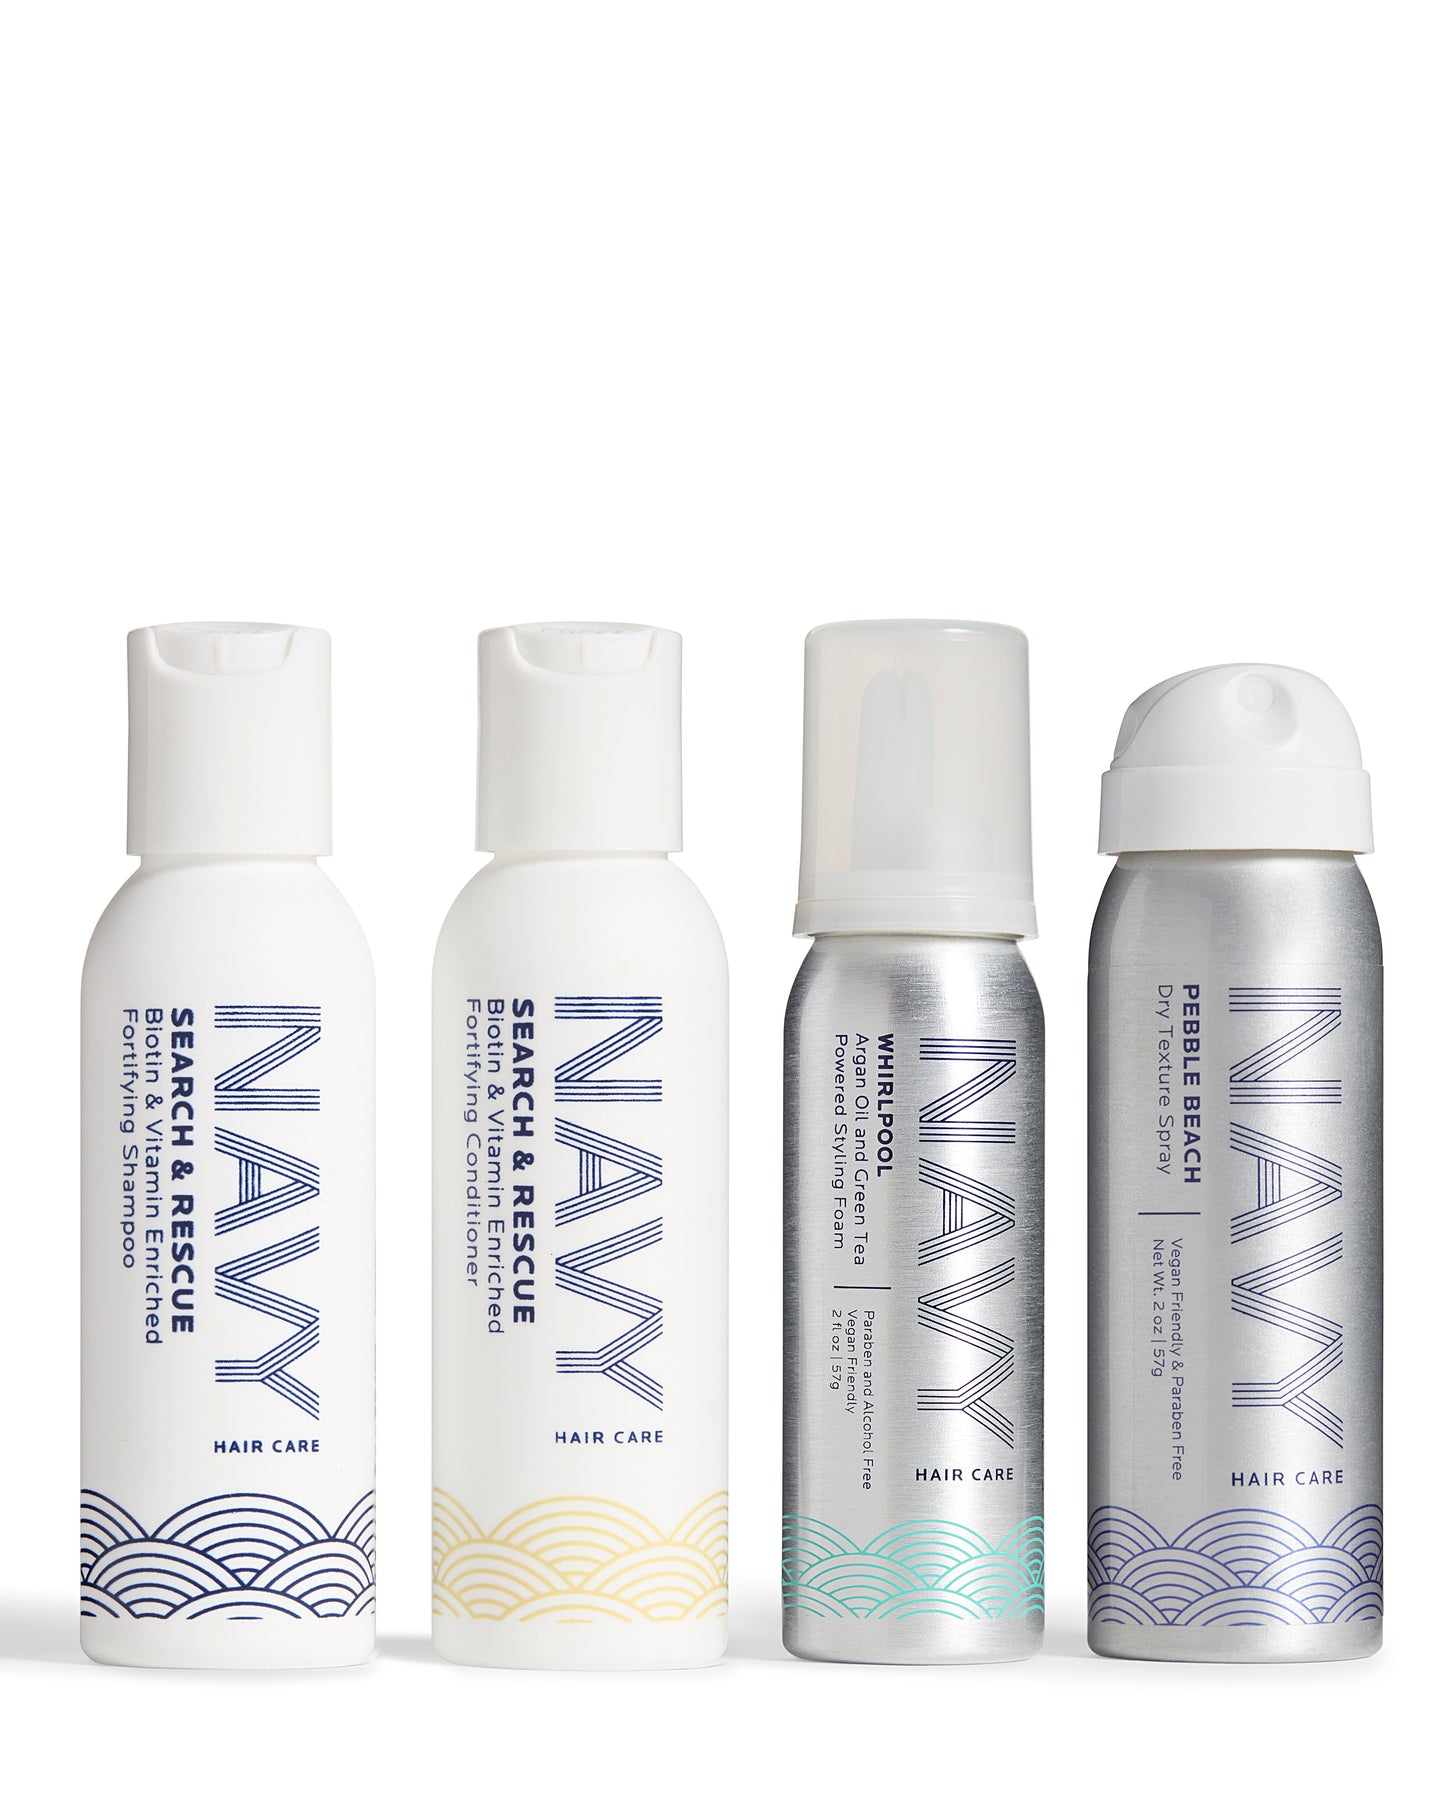  NAVY HAIR CARE Dry Shampoo for Women & Men 3oz, Travel Size  Volumizing Hair Shampoo, Hair Spray for Color Treated & All Types of Hair